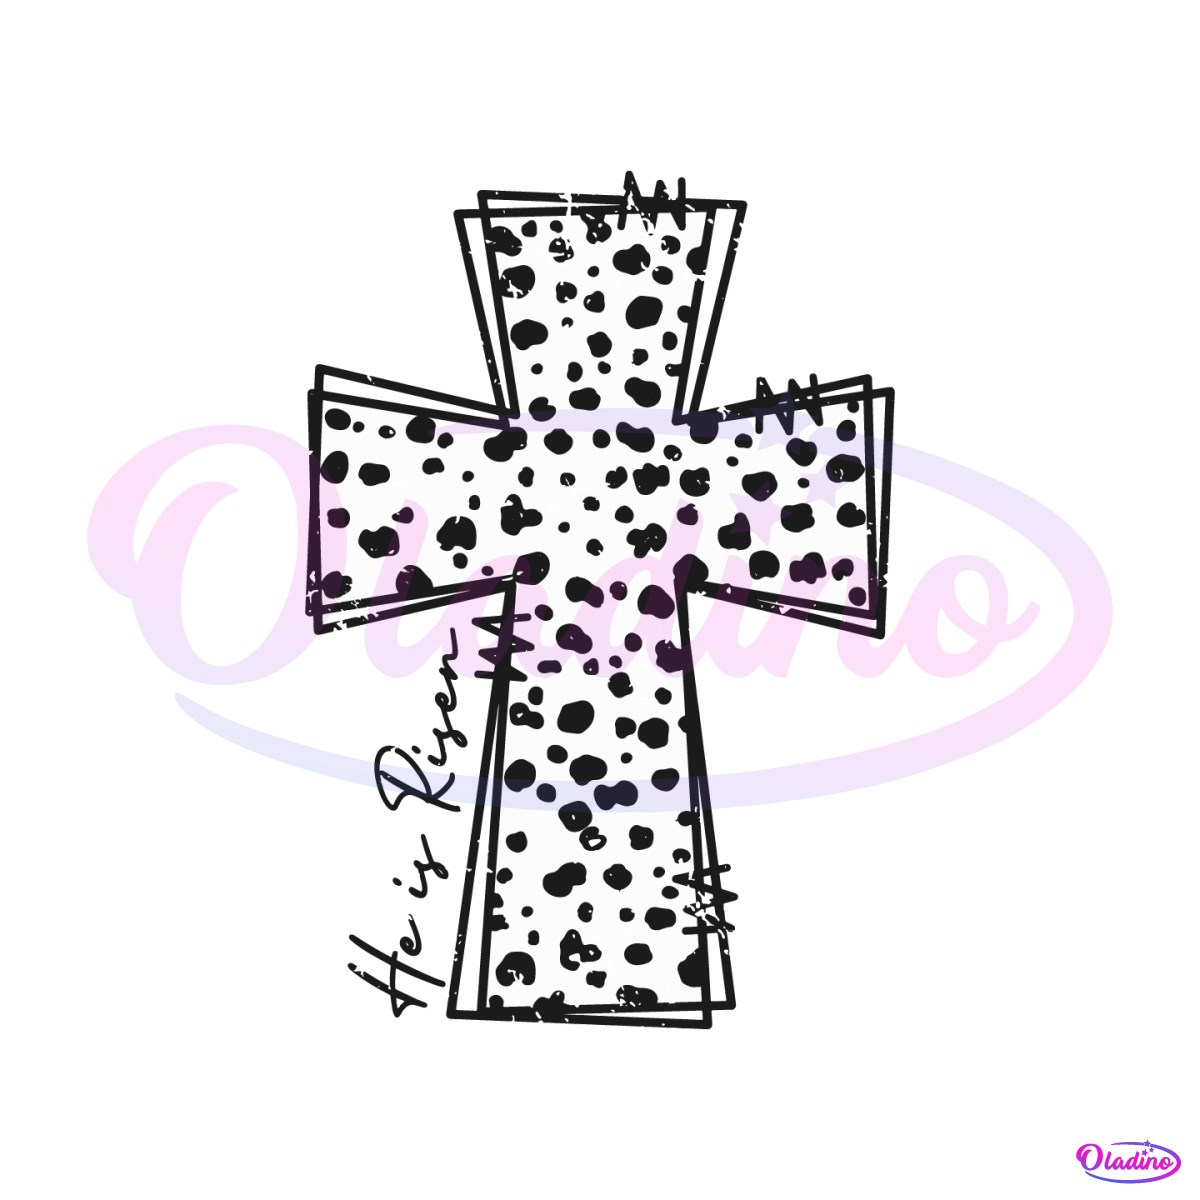 dalmatian-cross-he-is-risen-happy-easter-svg